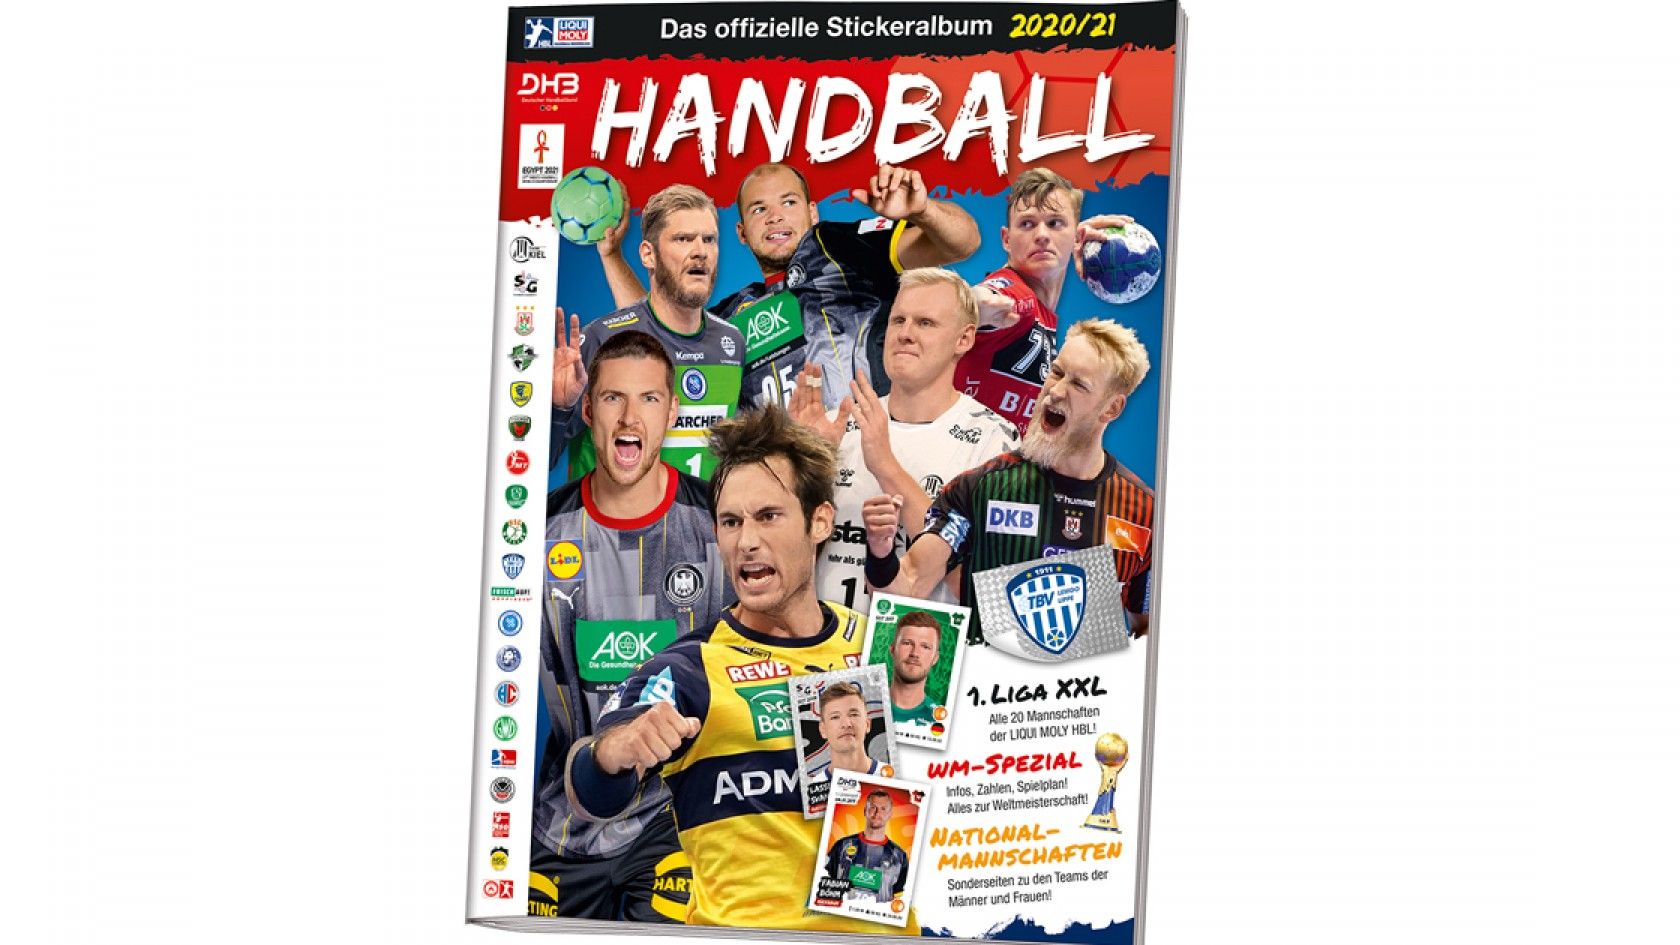 WM Sticker & Cards 2020/2021 Starterpack Sammelmappe Handball Bundesliga